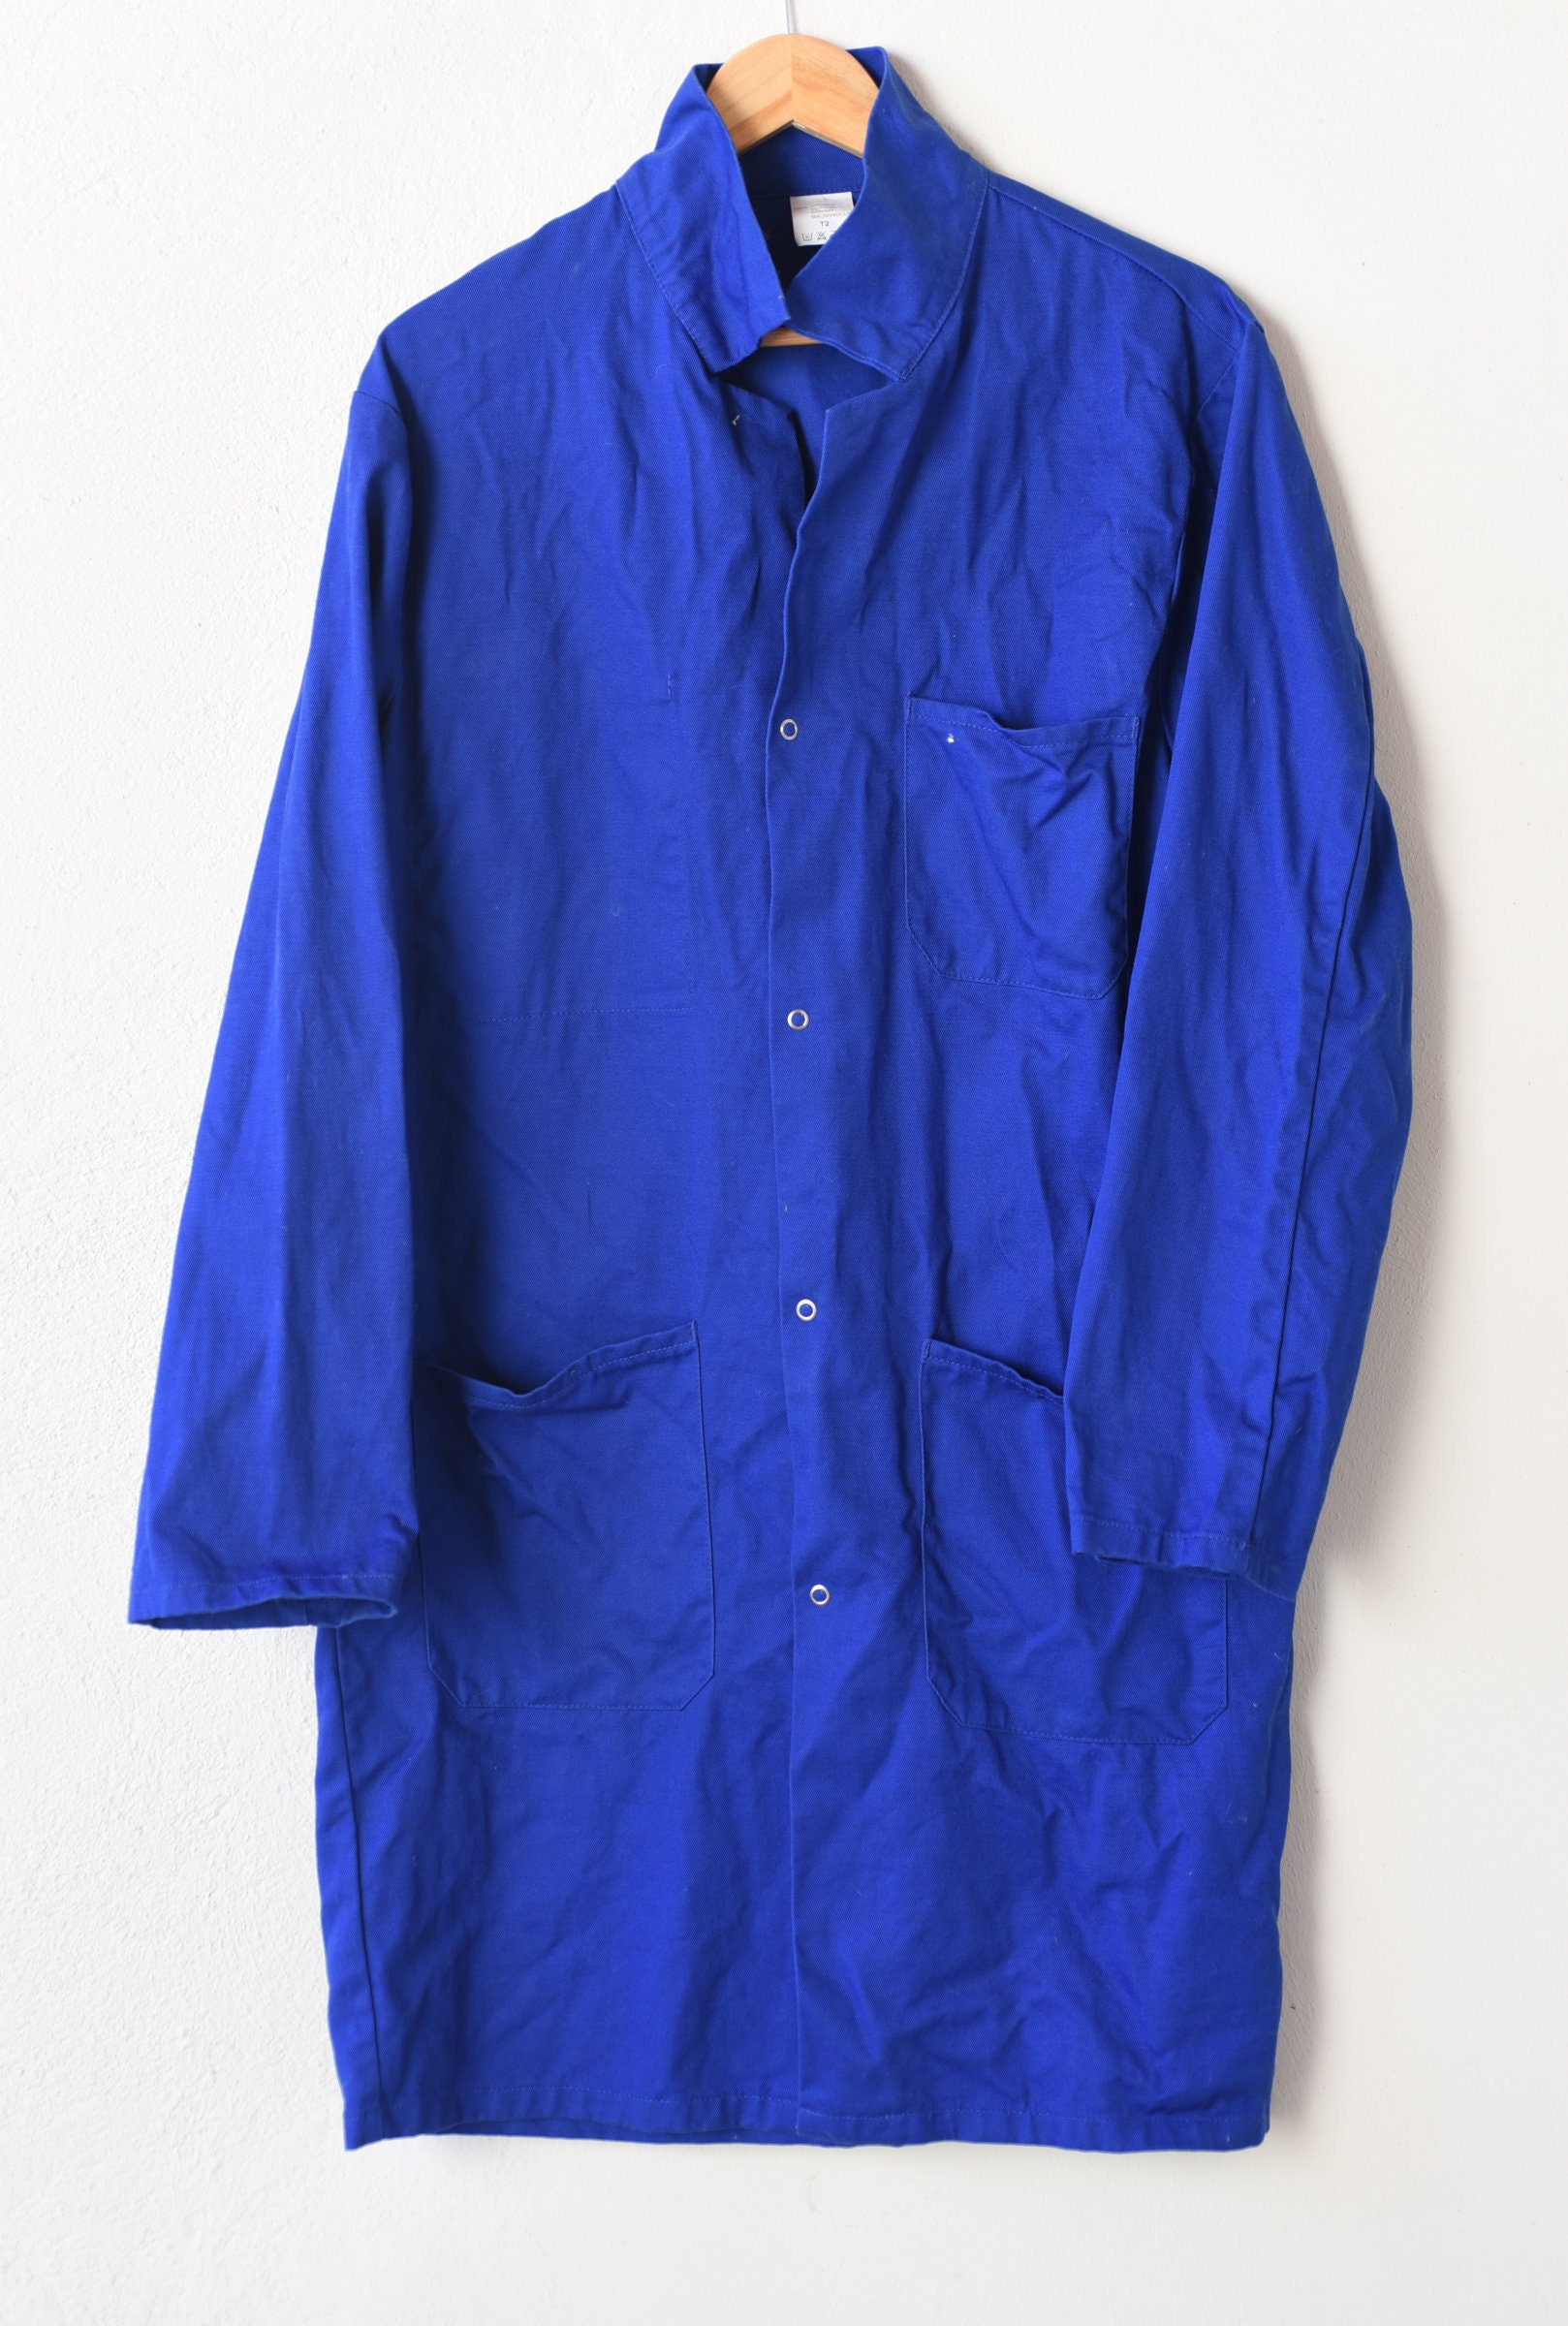 jacket french work wear blue vintage utility factory blazer artisan ...